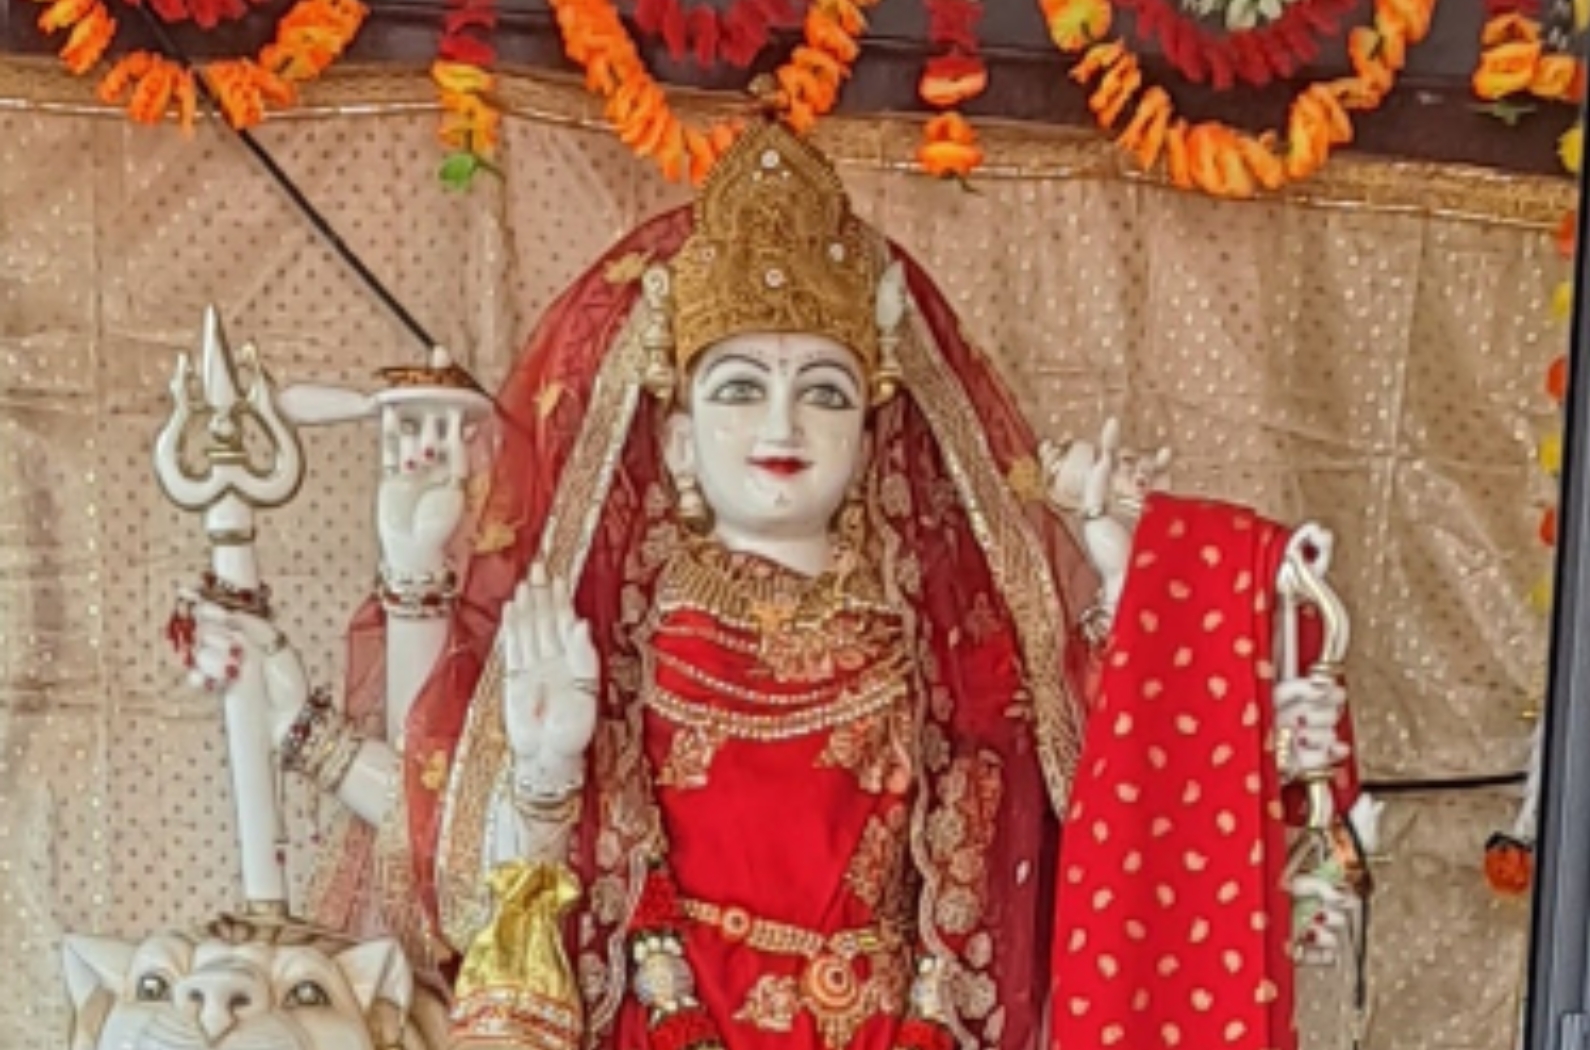 Ayyappan is worshiped as the chief deity in Sabarimala